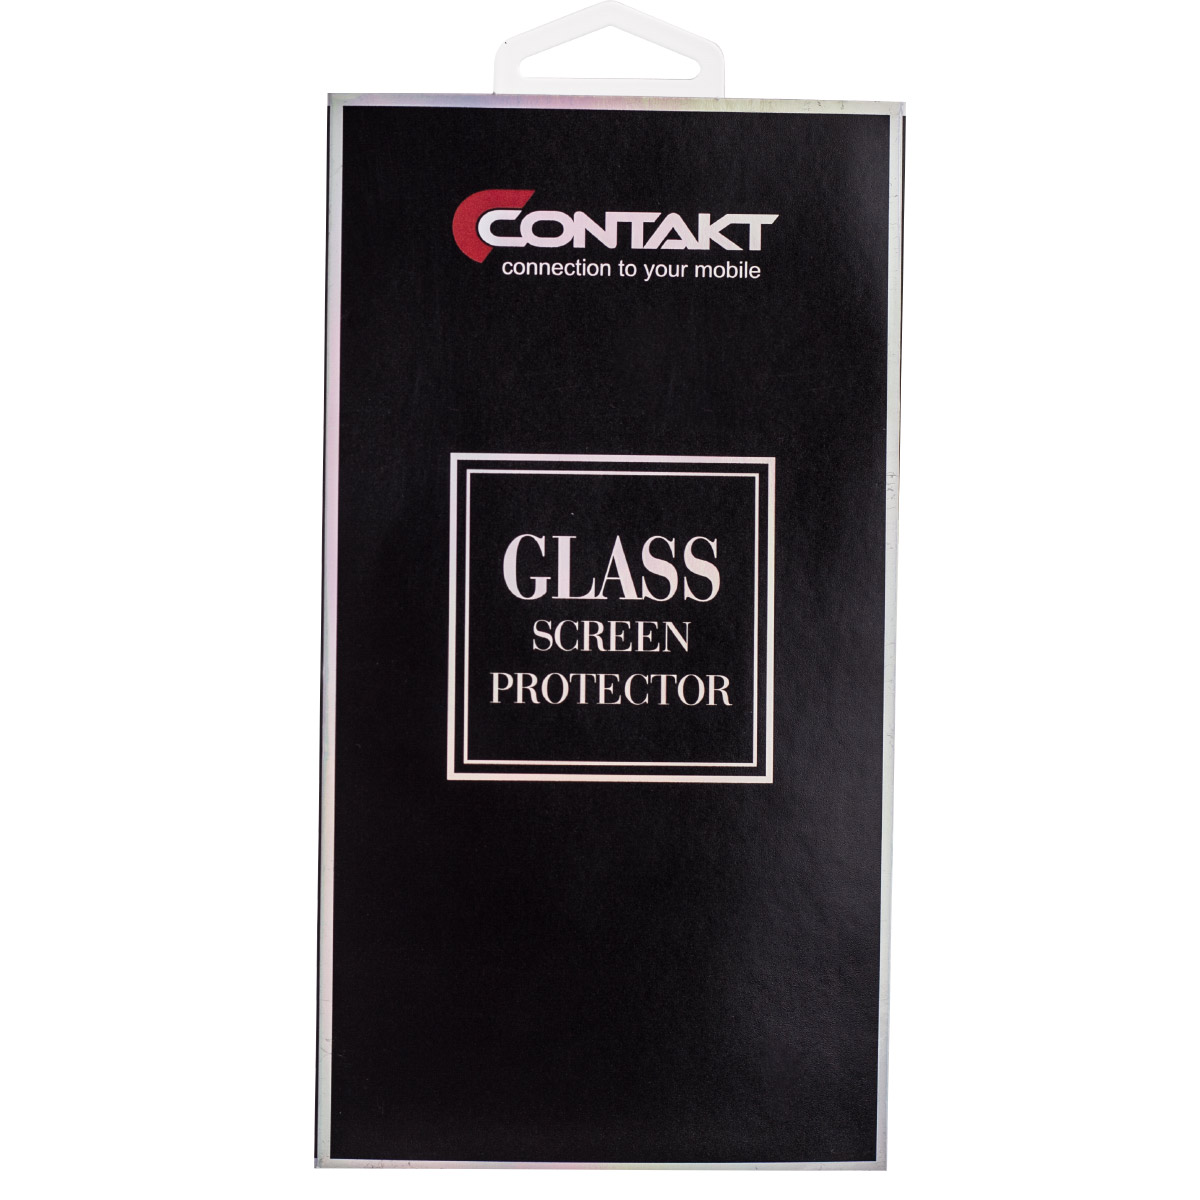 Folie sticla flexibila Huawei P10, Contakt thumb